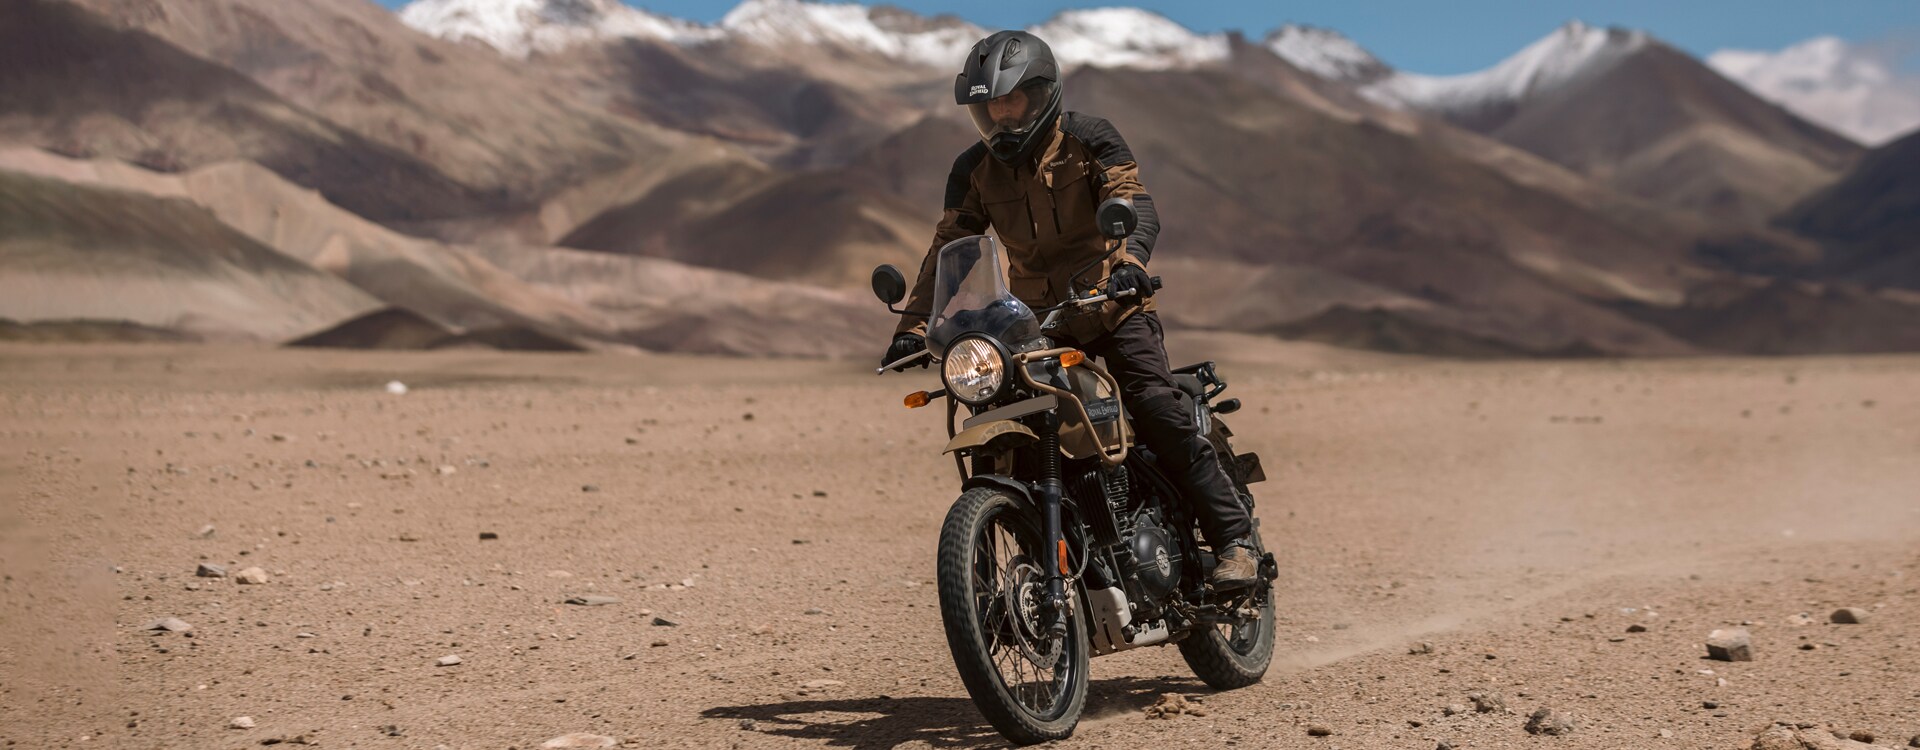 Himalayan 410 - For an unshakable ride